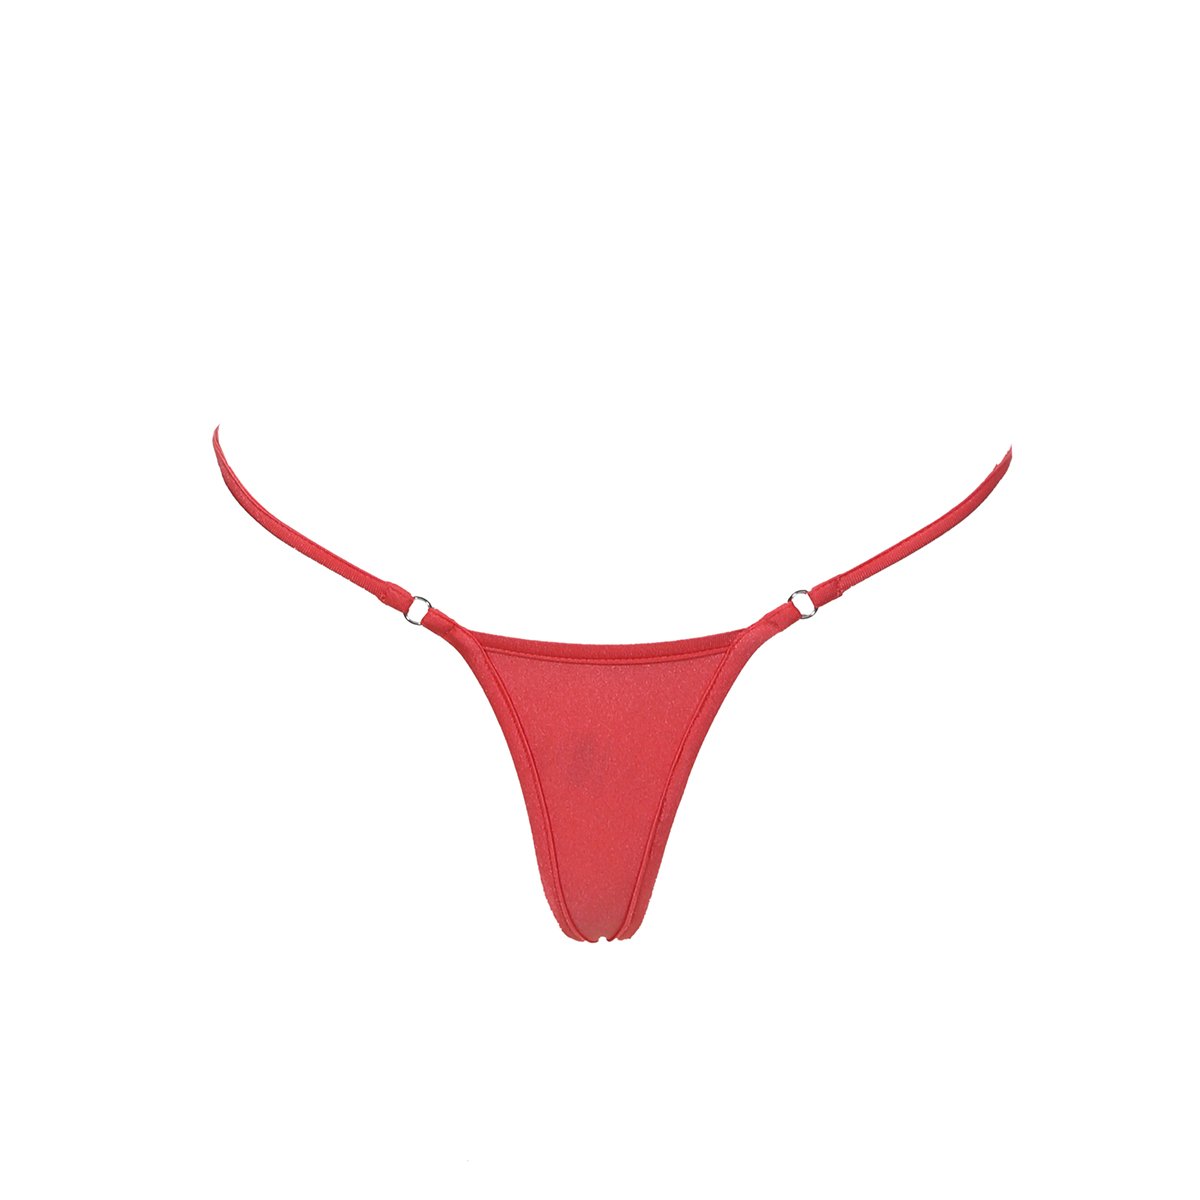 Thong g string micro bikini bottom bright neon red